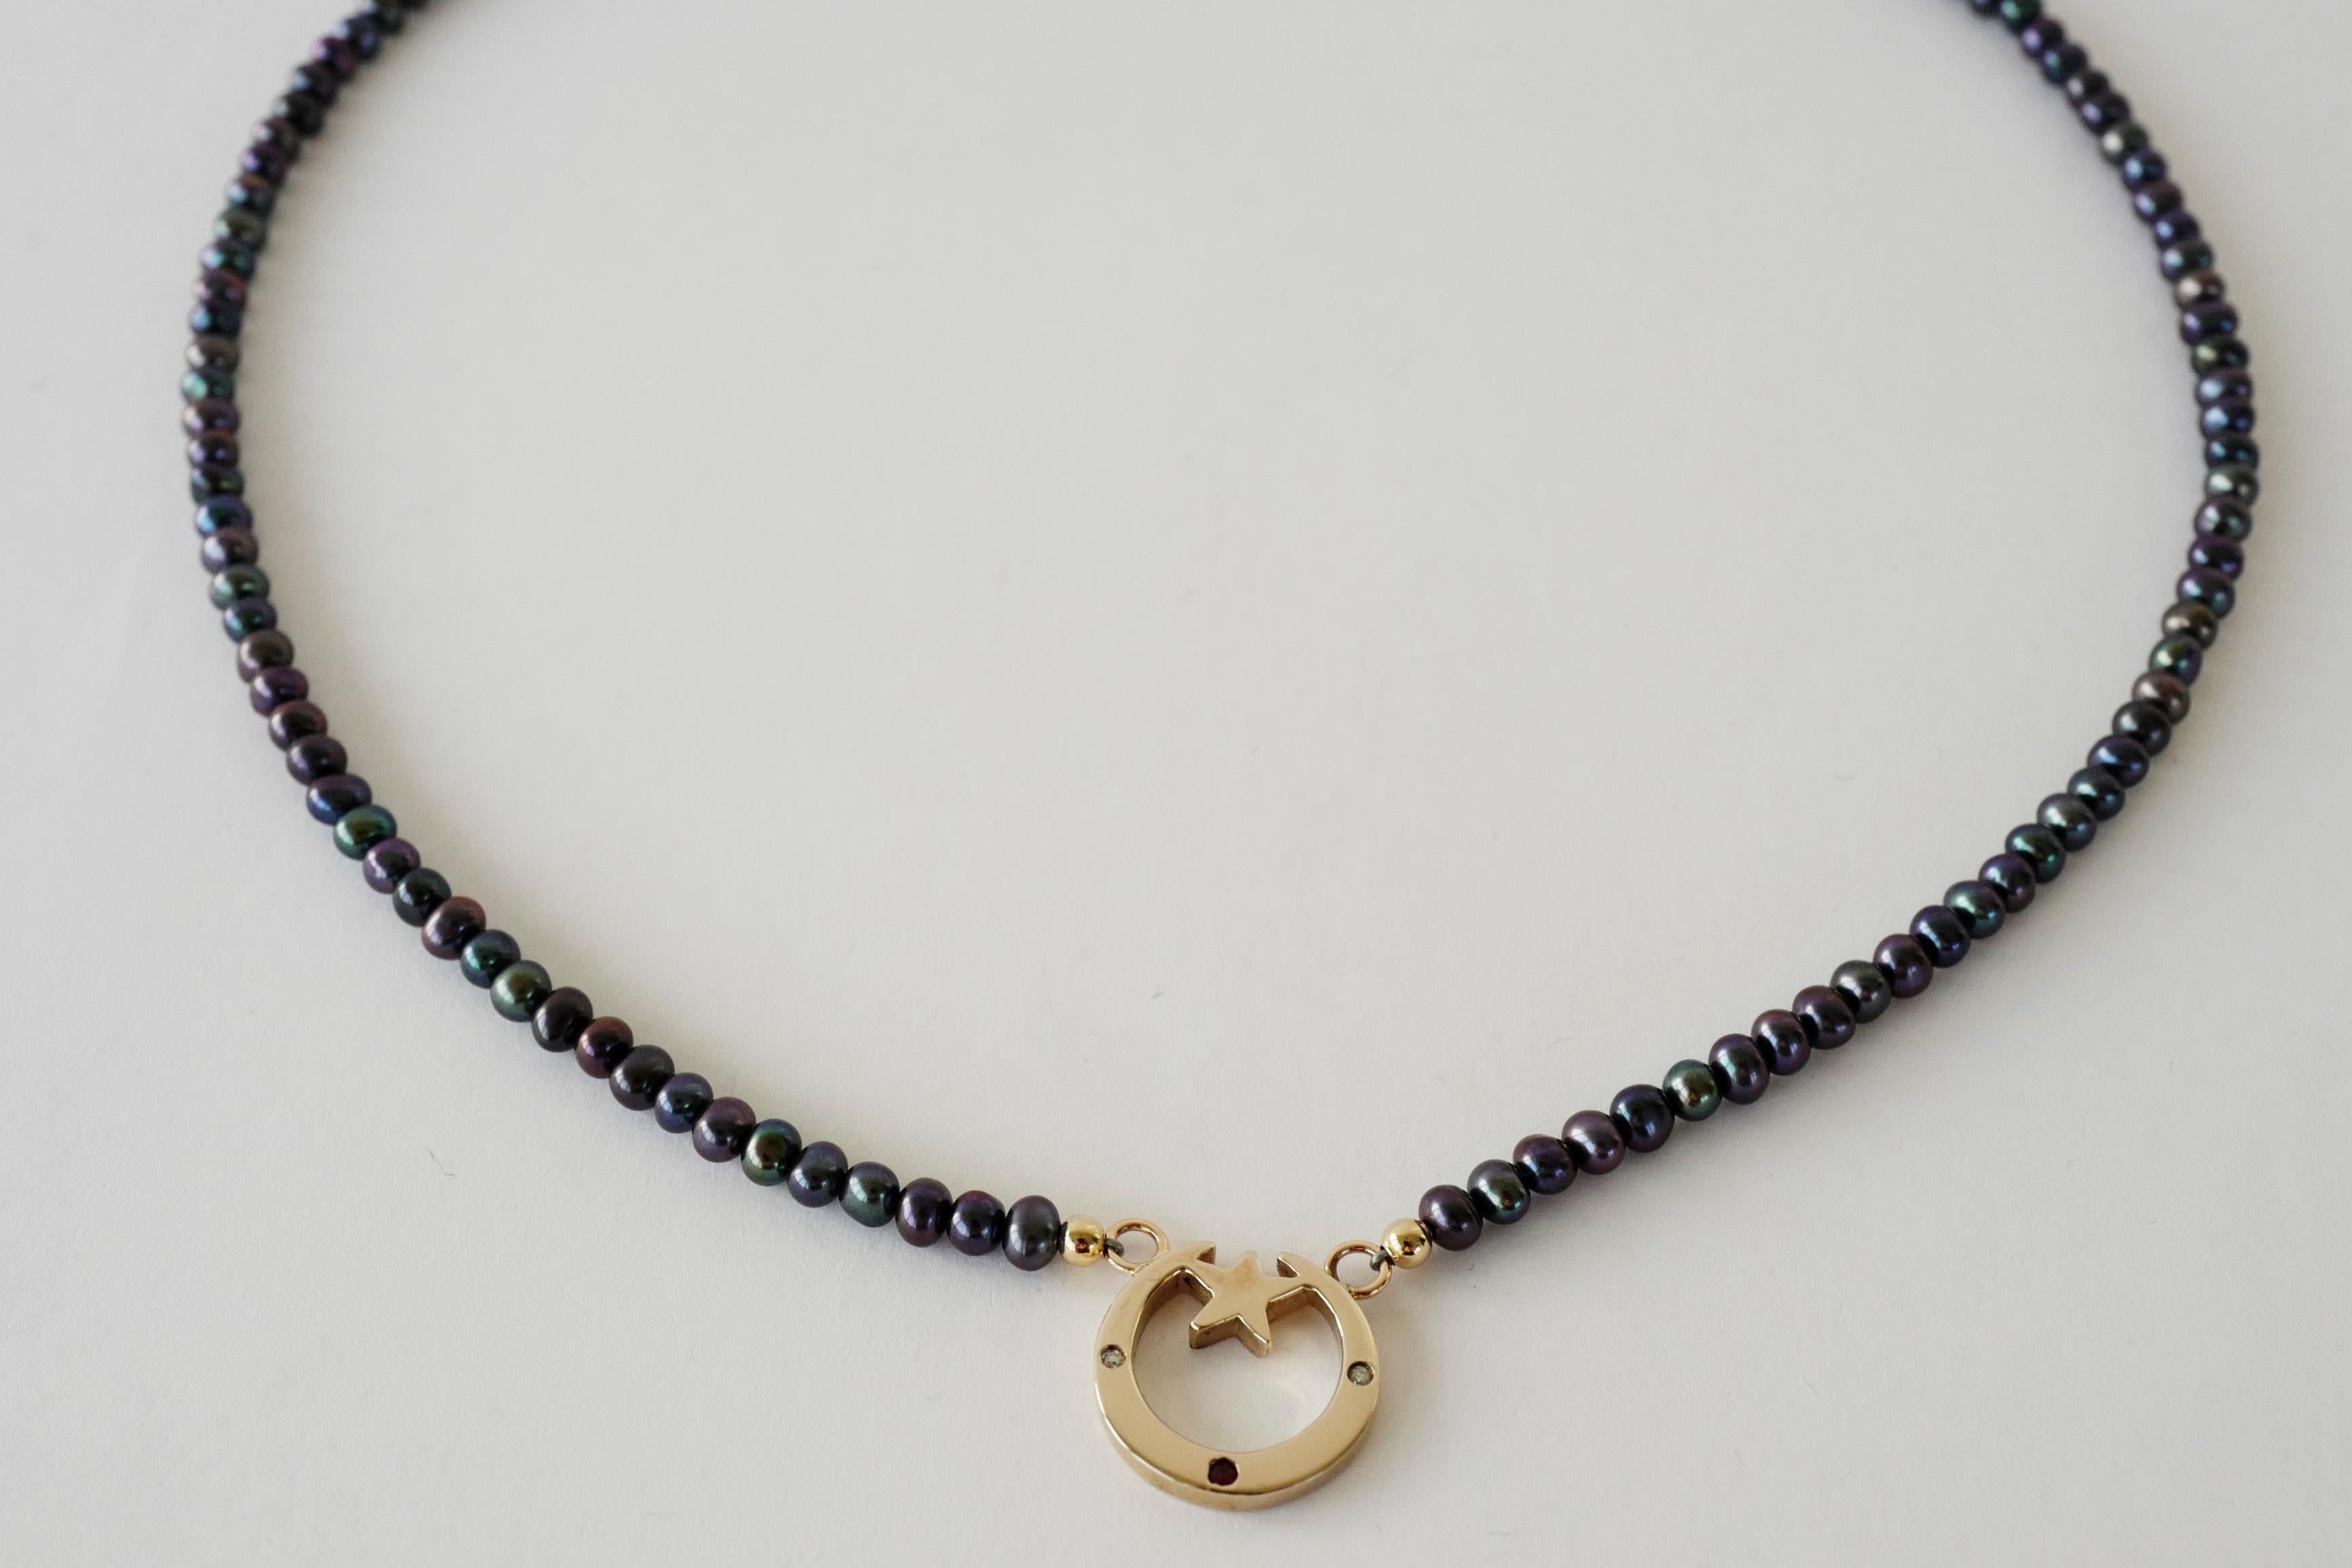 black crescent moon necklace